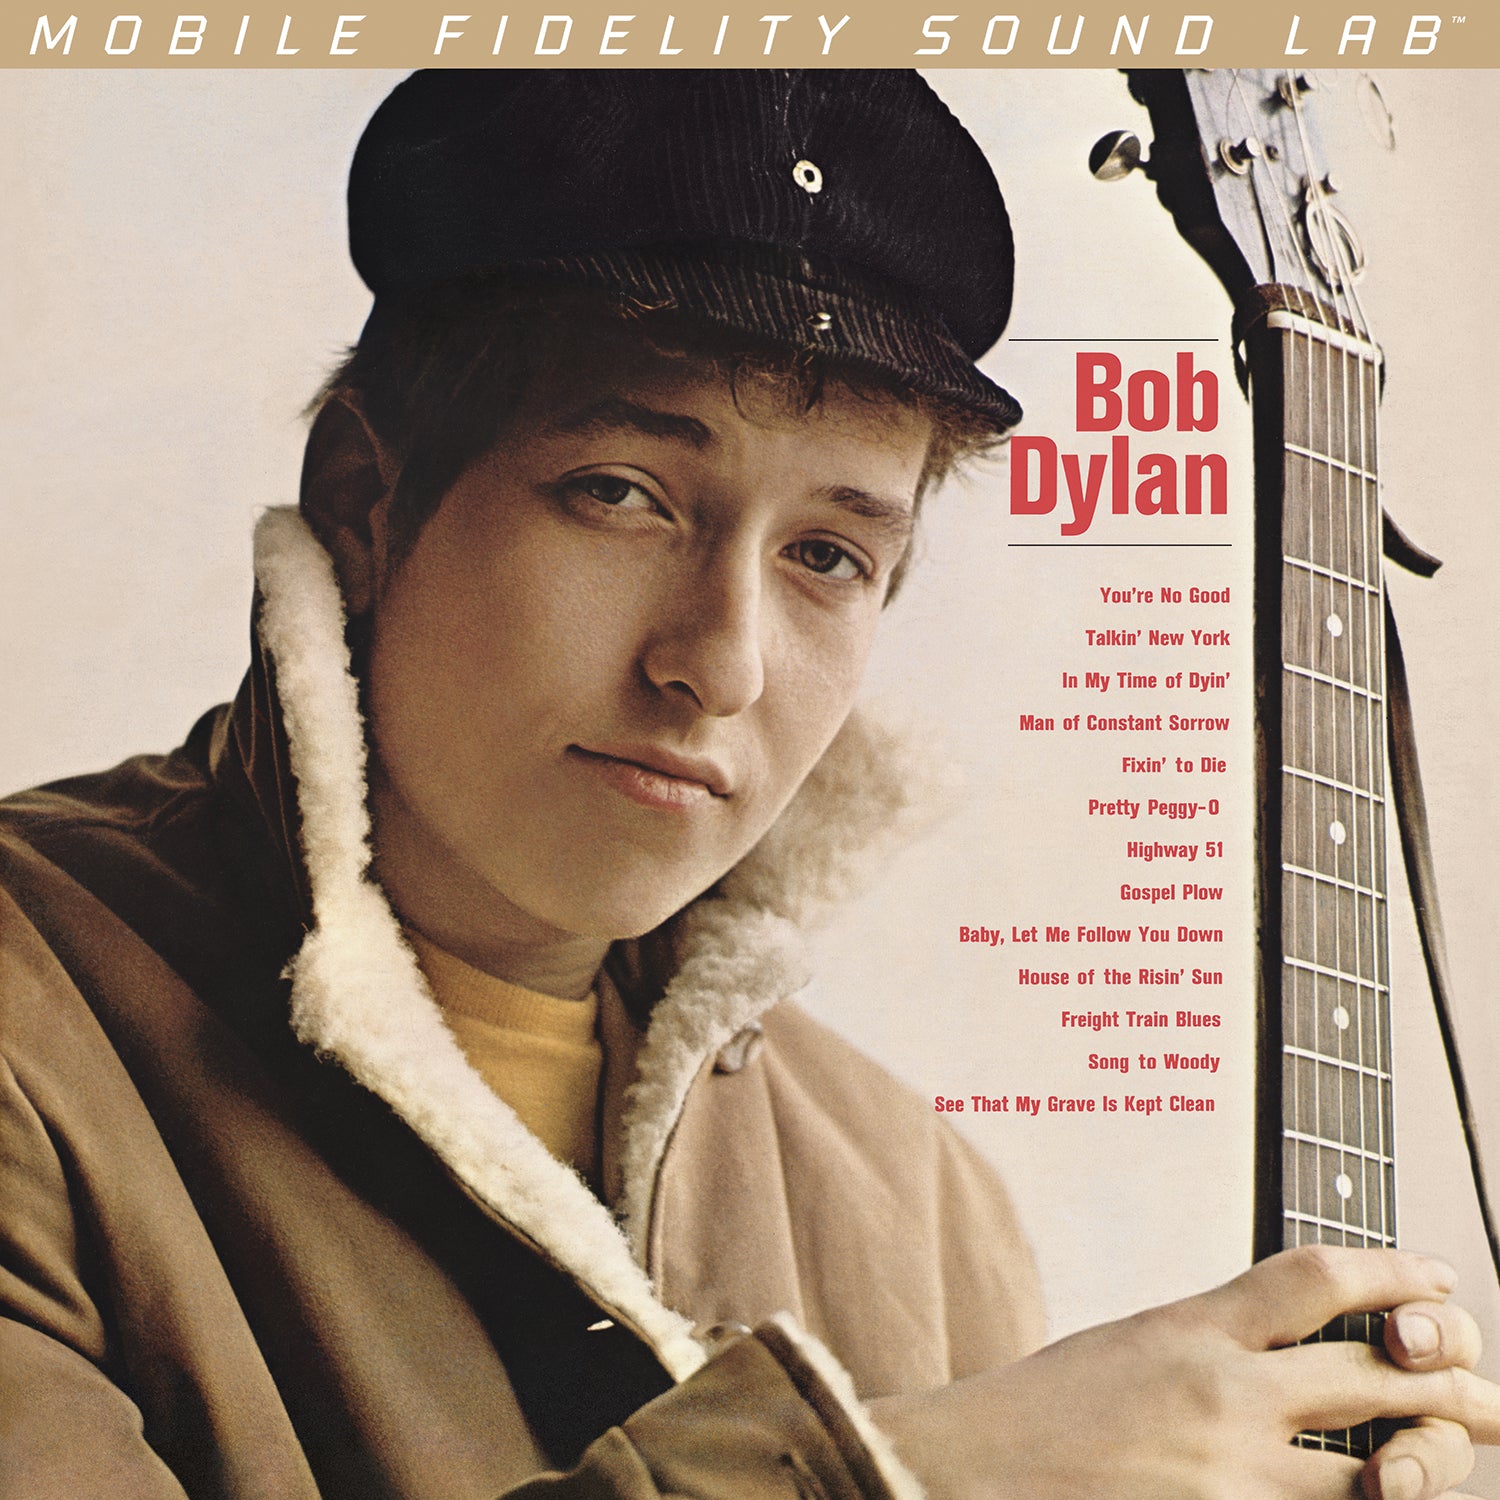 Bob_Dylan_BobDylan_7816fd39-5da2-4ab6-83bc-635936fa5176_1500x.jpg